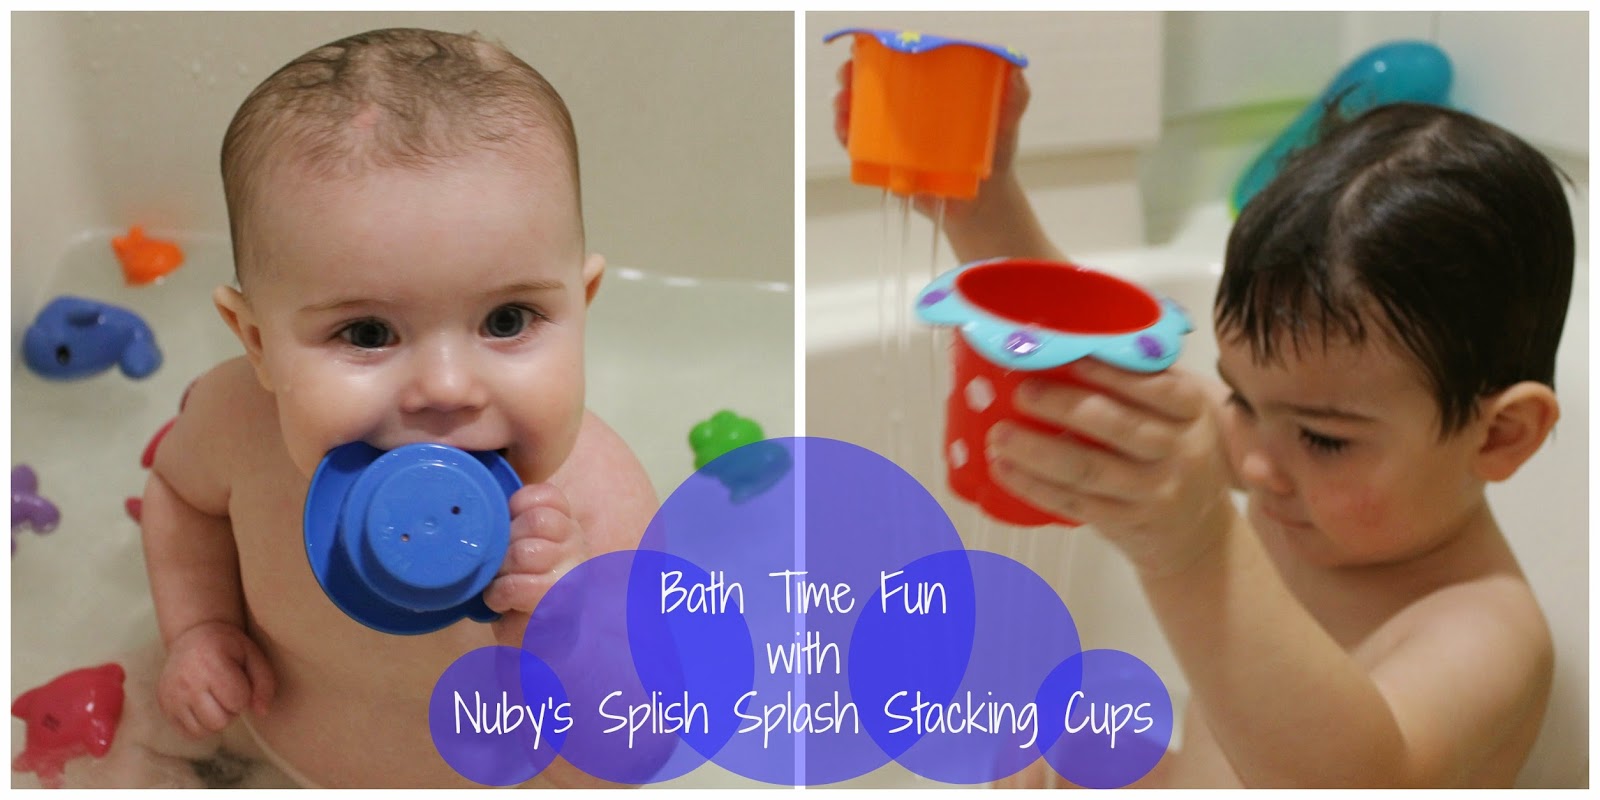 Bath Time Fun with Nuby